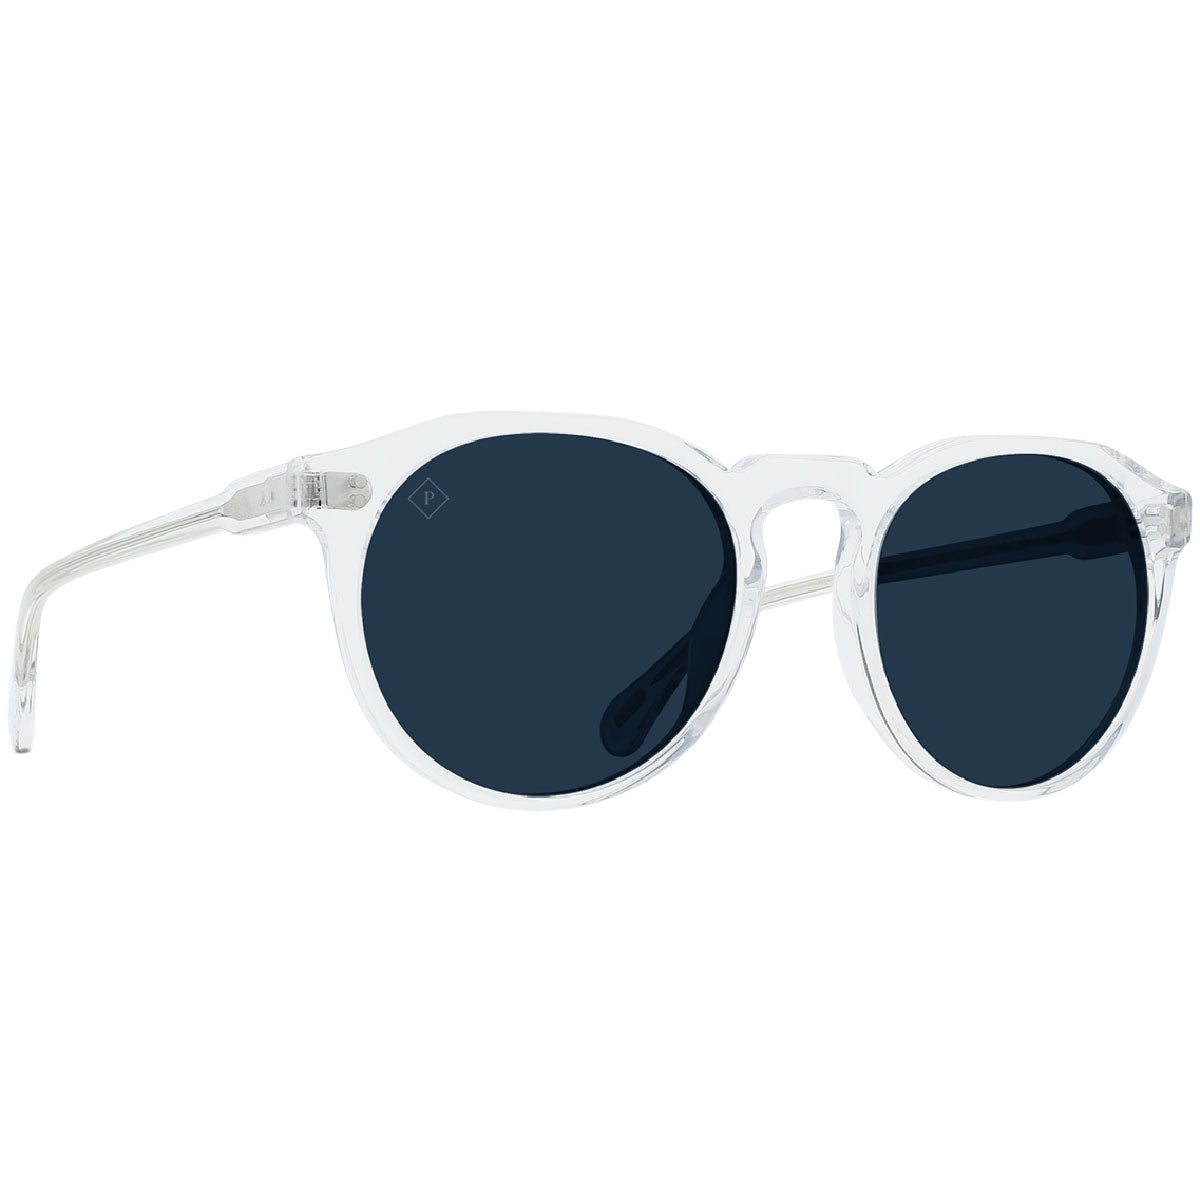 Raen Remmy 52 Sunglasses - Crystal Clear/Polarized Blue image 1